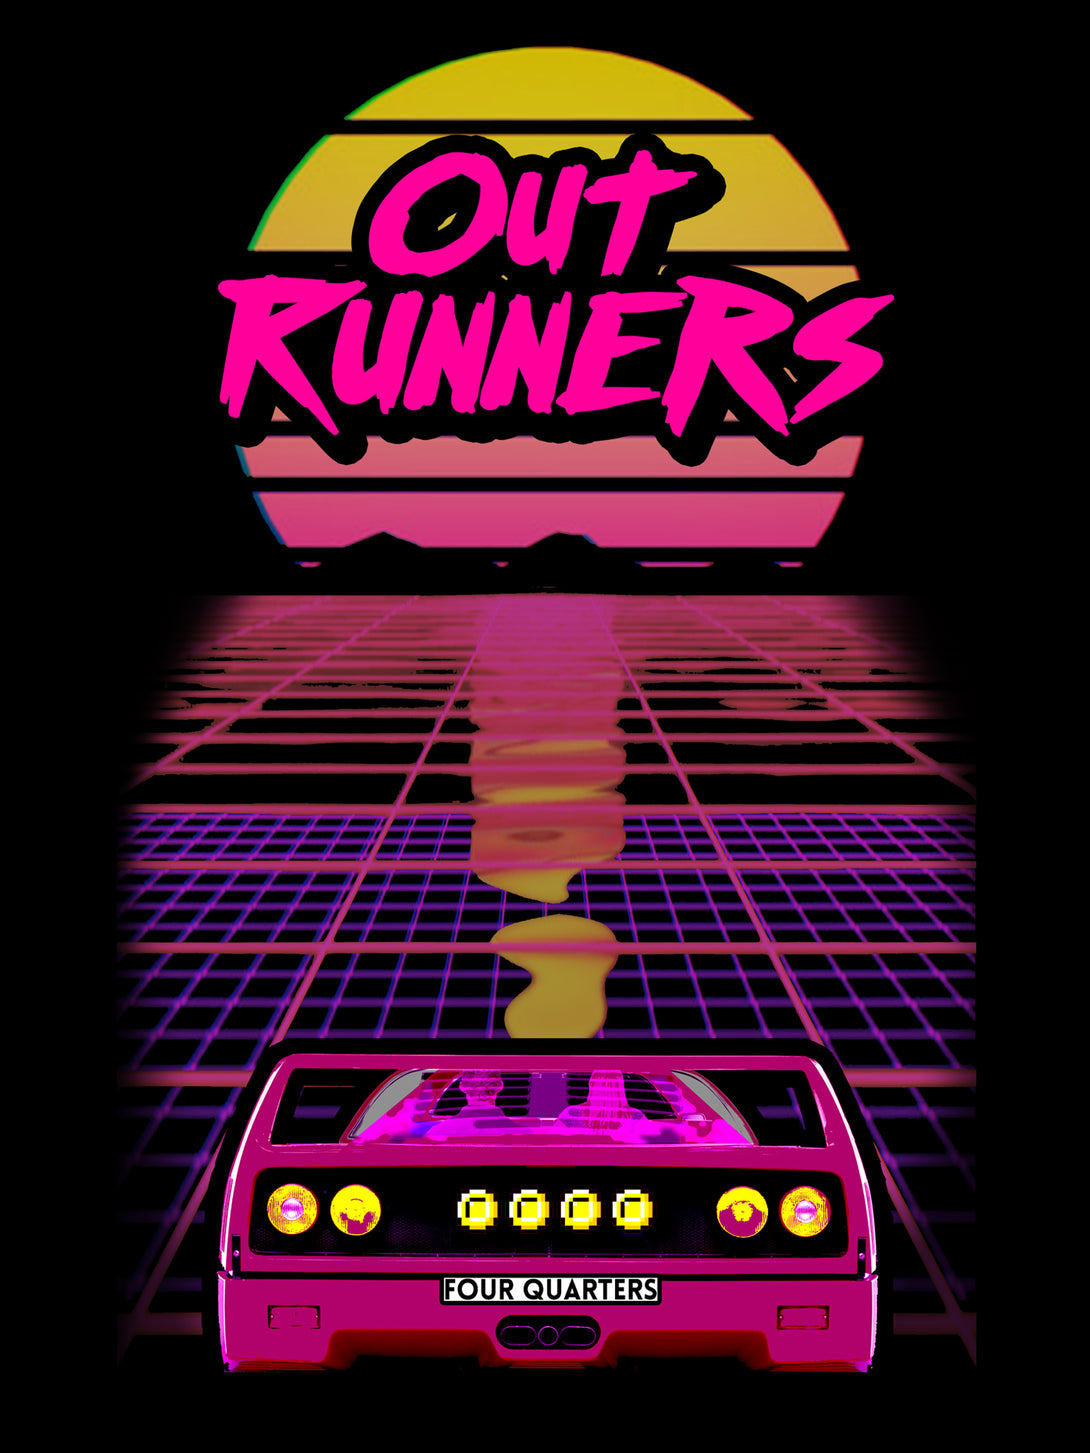 The Four Quarters Outrunners Flyer Official Men's T-shirt (Black) design